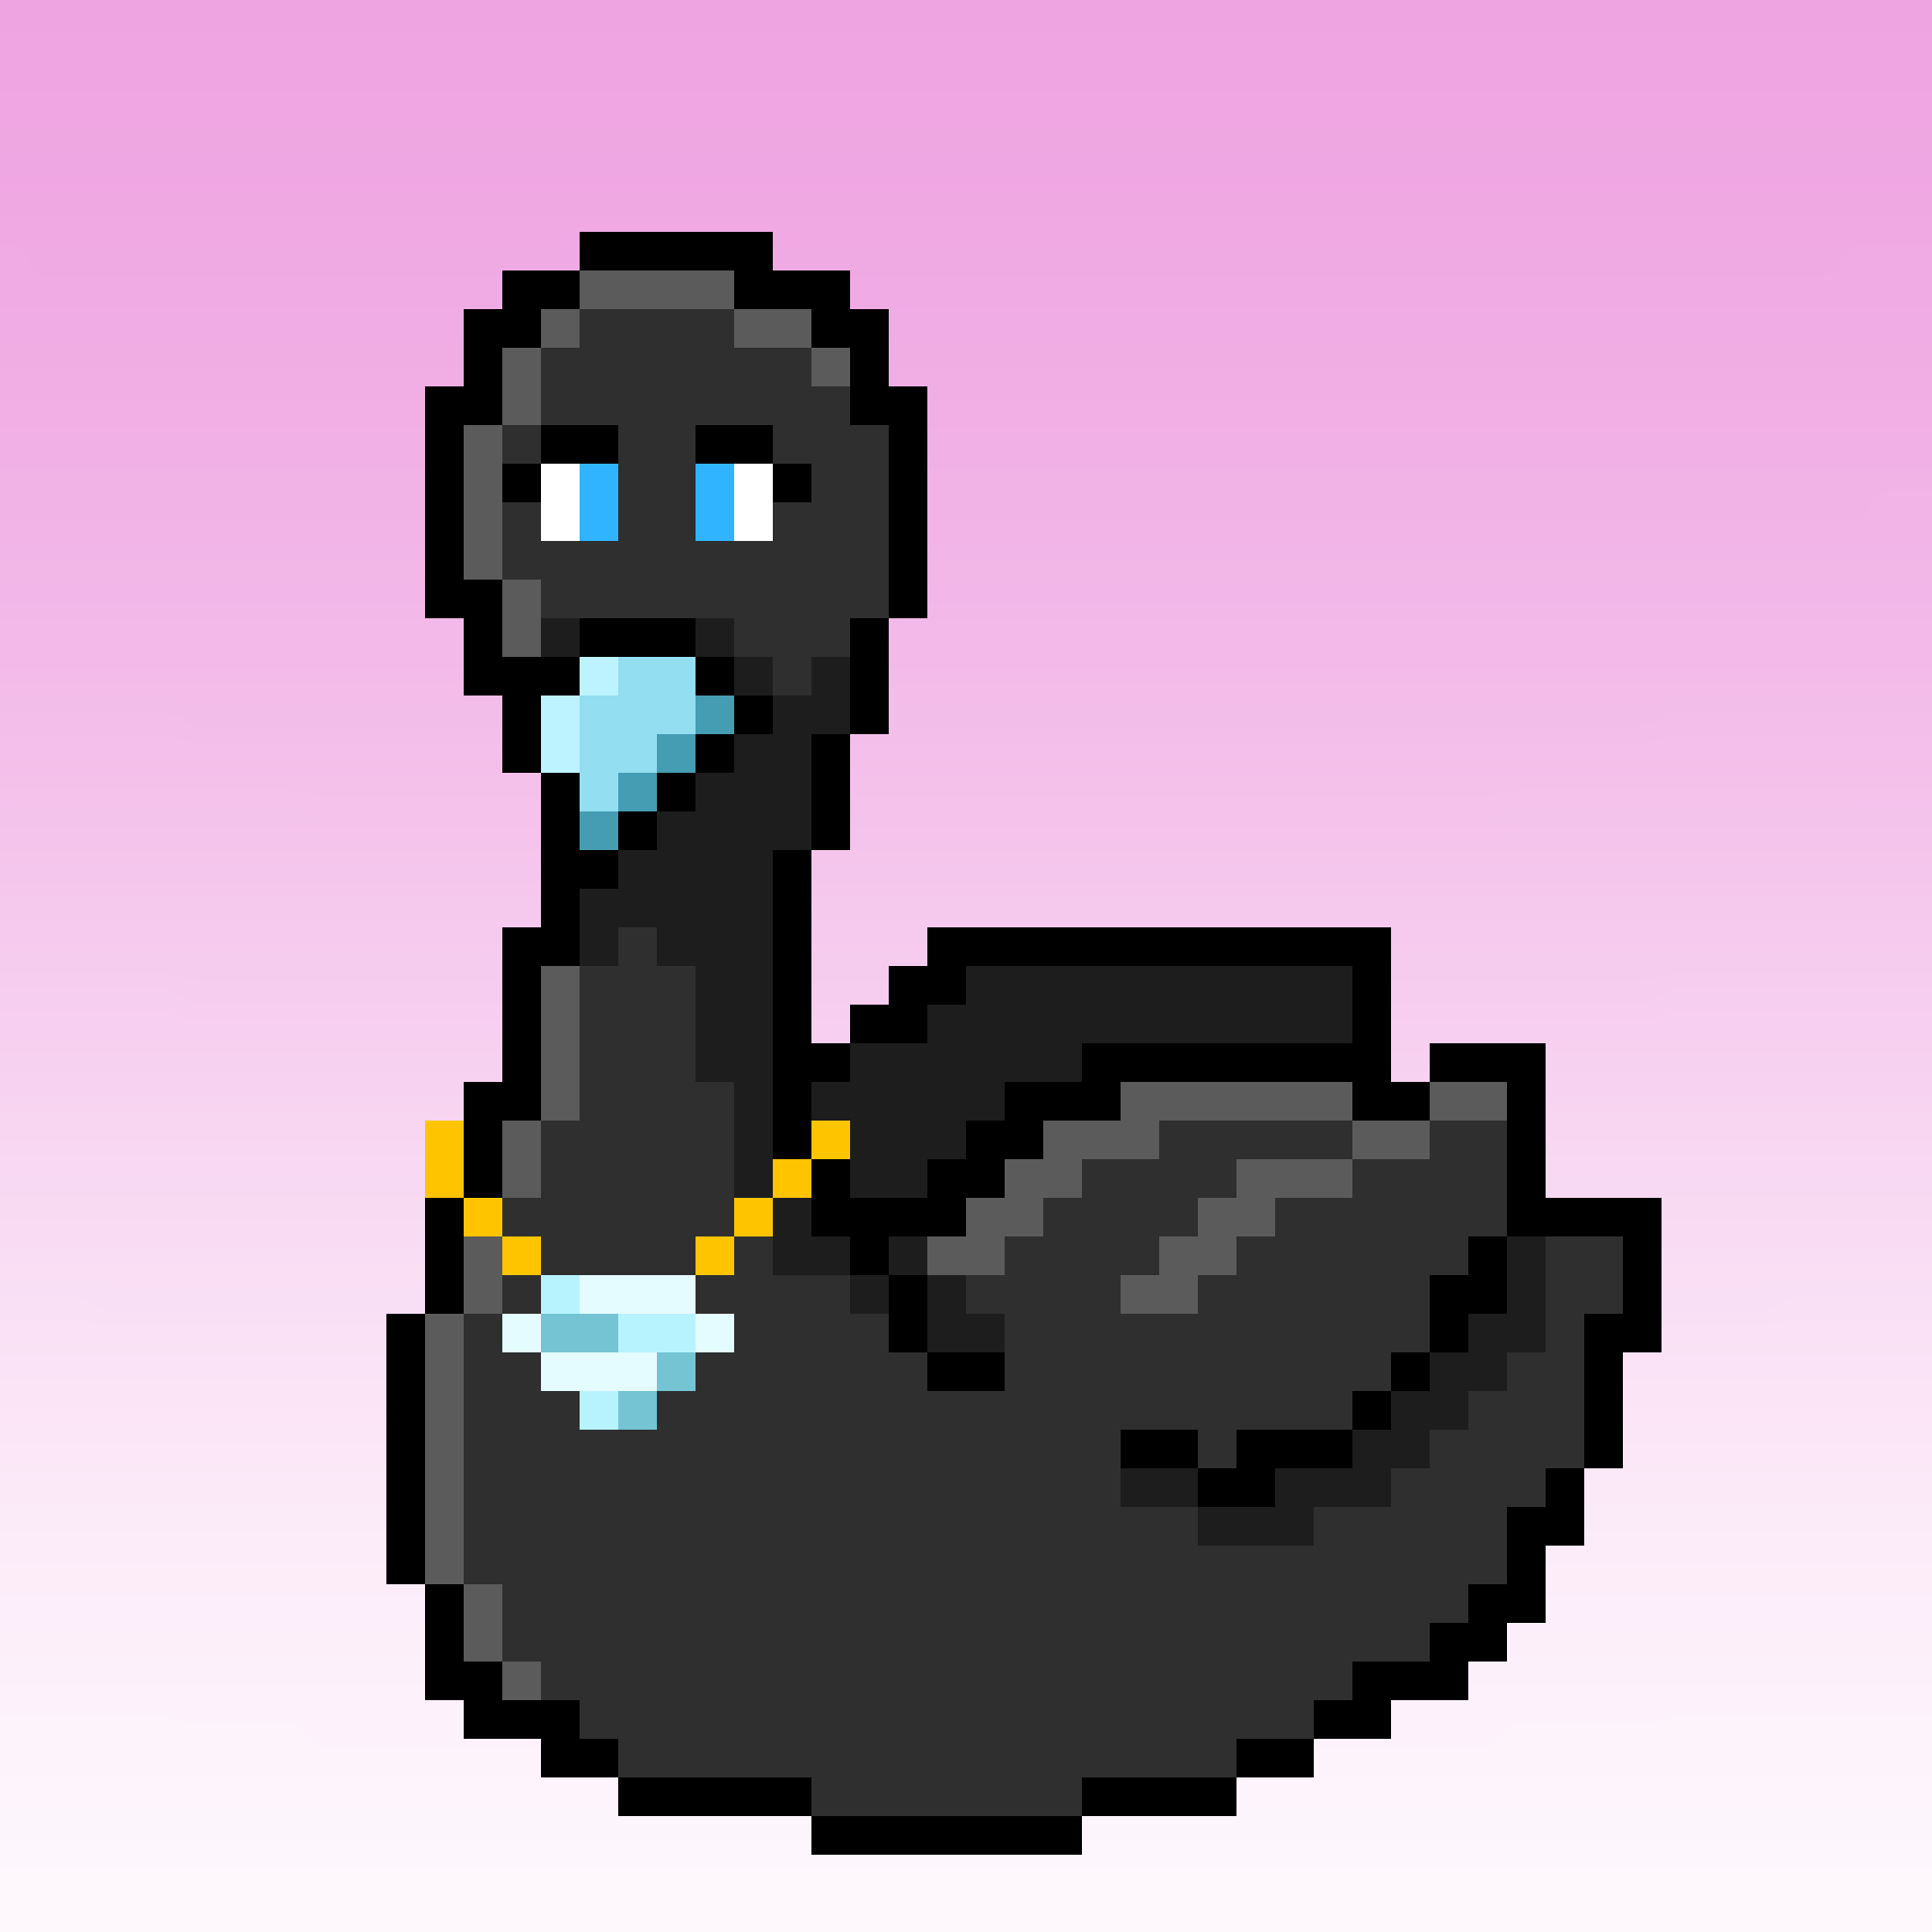 BlackSwan